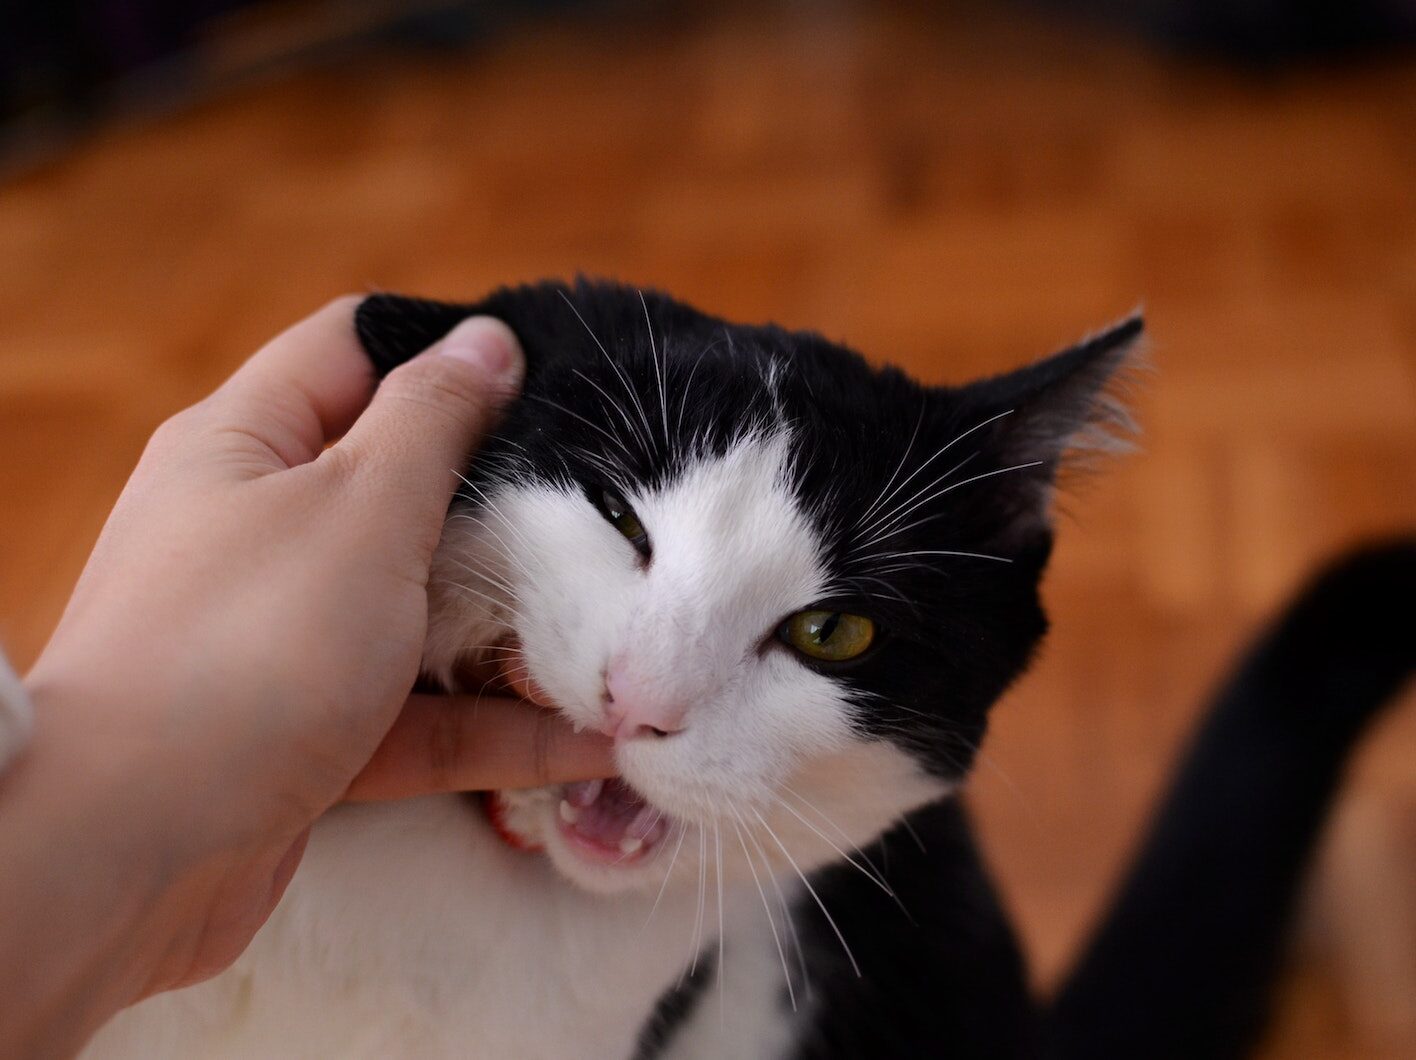 Cat Biting Persons Finger